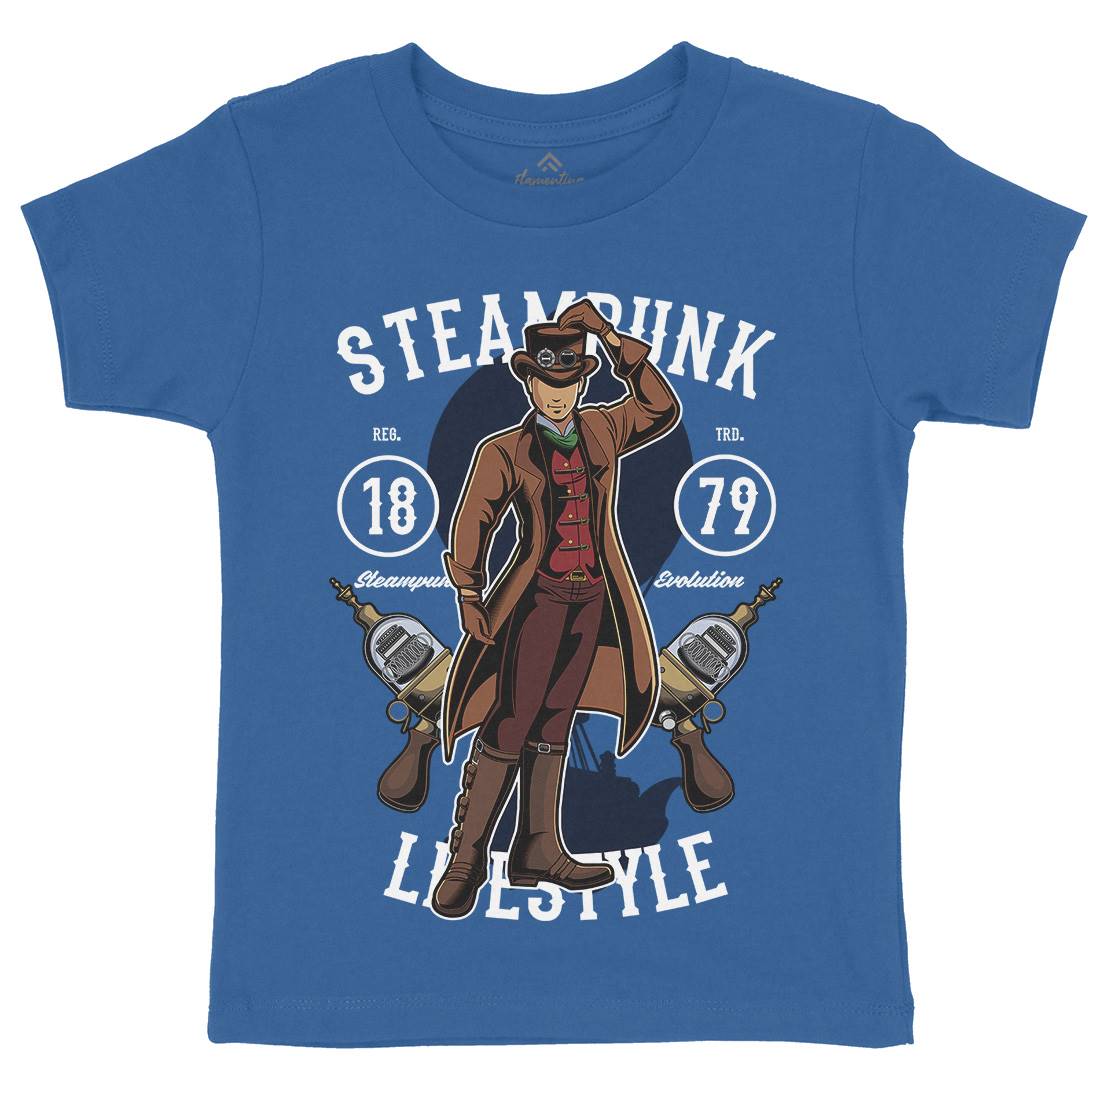 Lifestyle Kids Crew Neck T-Shirt Steampunk C450